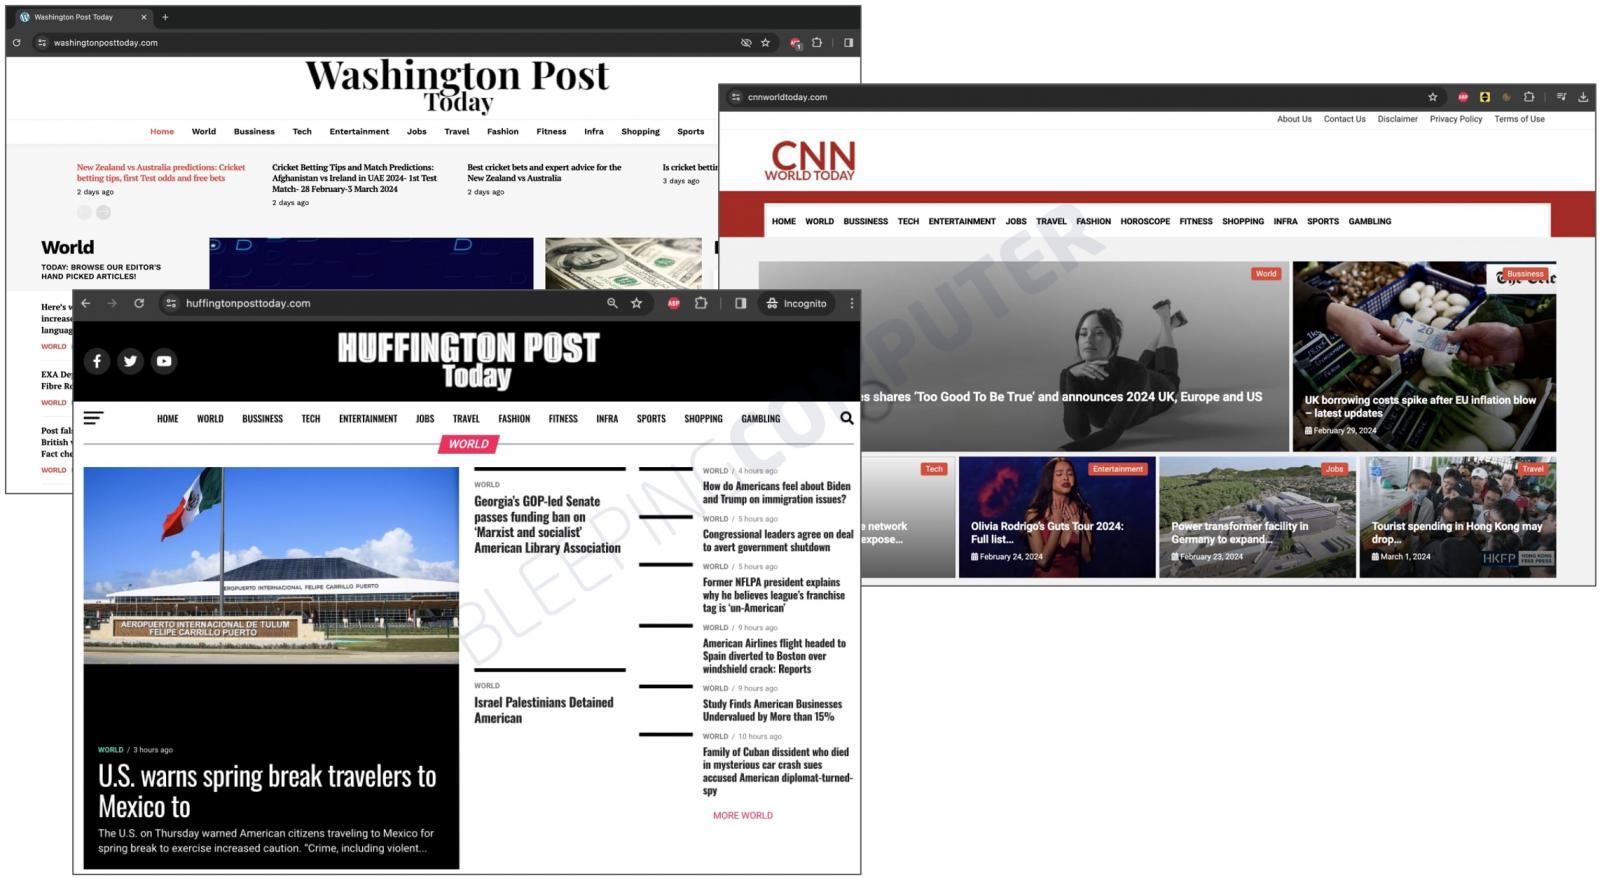 Websites impersonate popular media outlets like Washington Post, Guardian, CNN, etc.